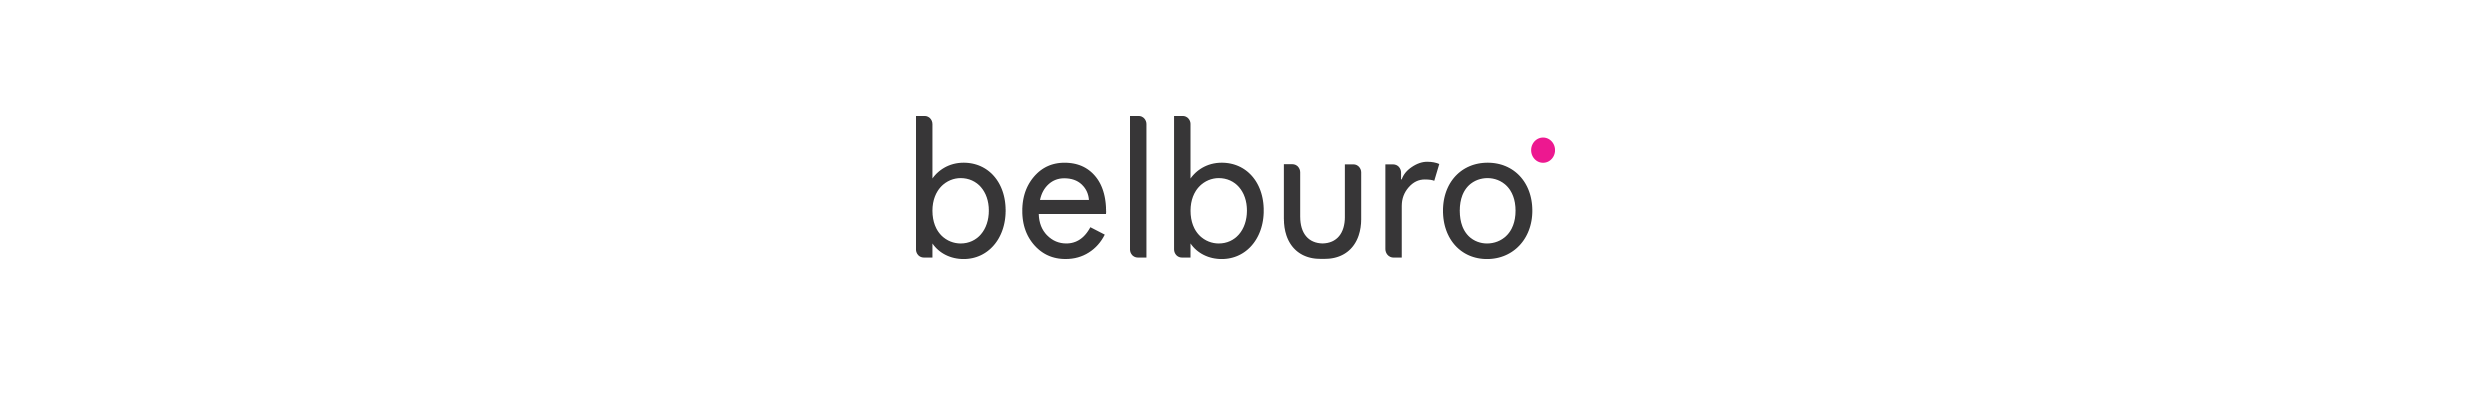 Belburó Brand Identity Studio's profile banner